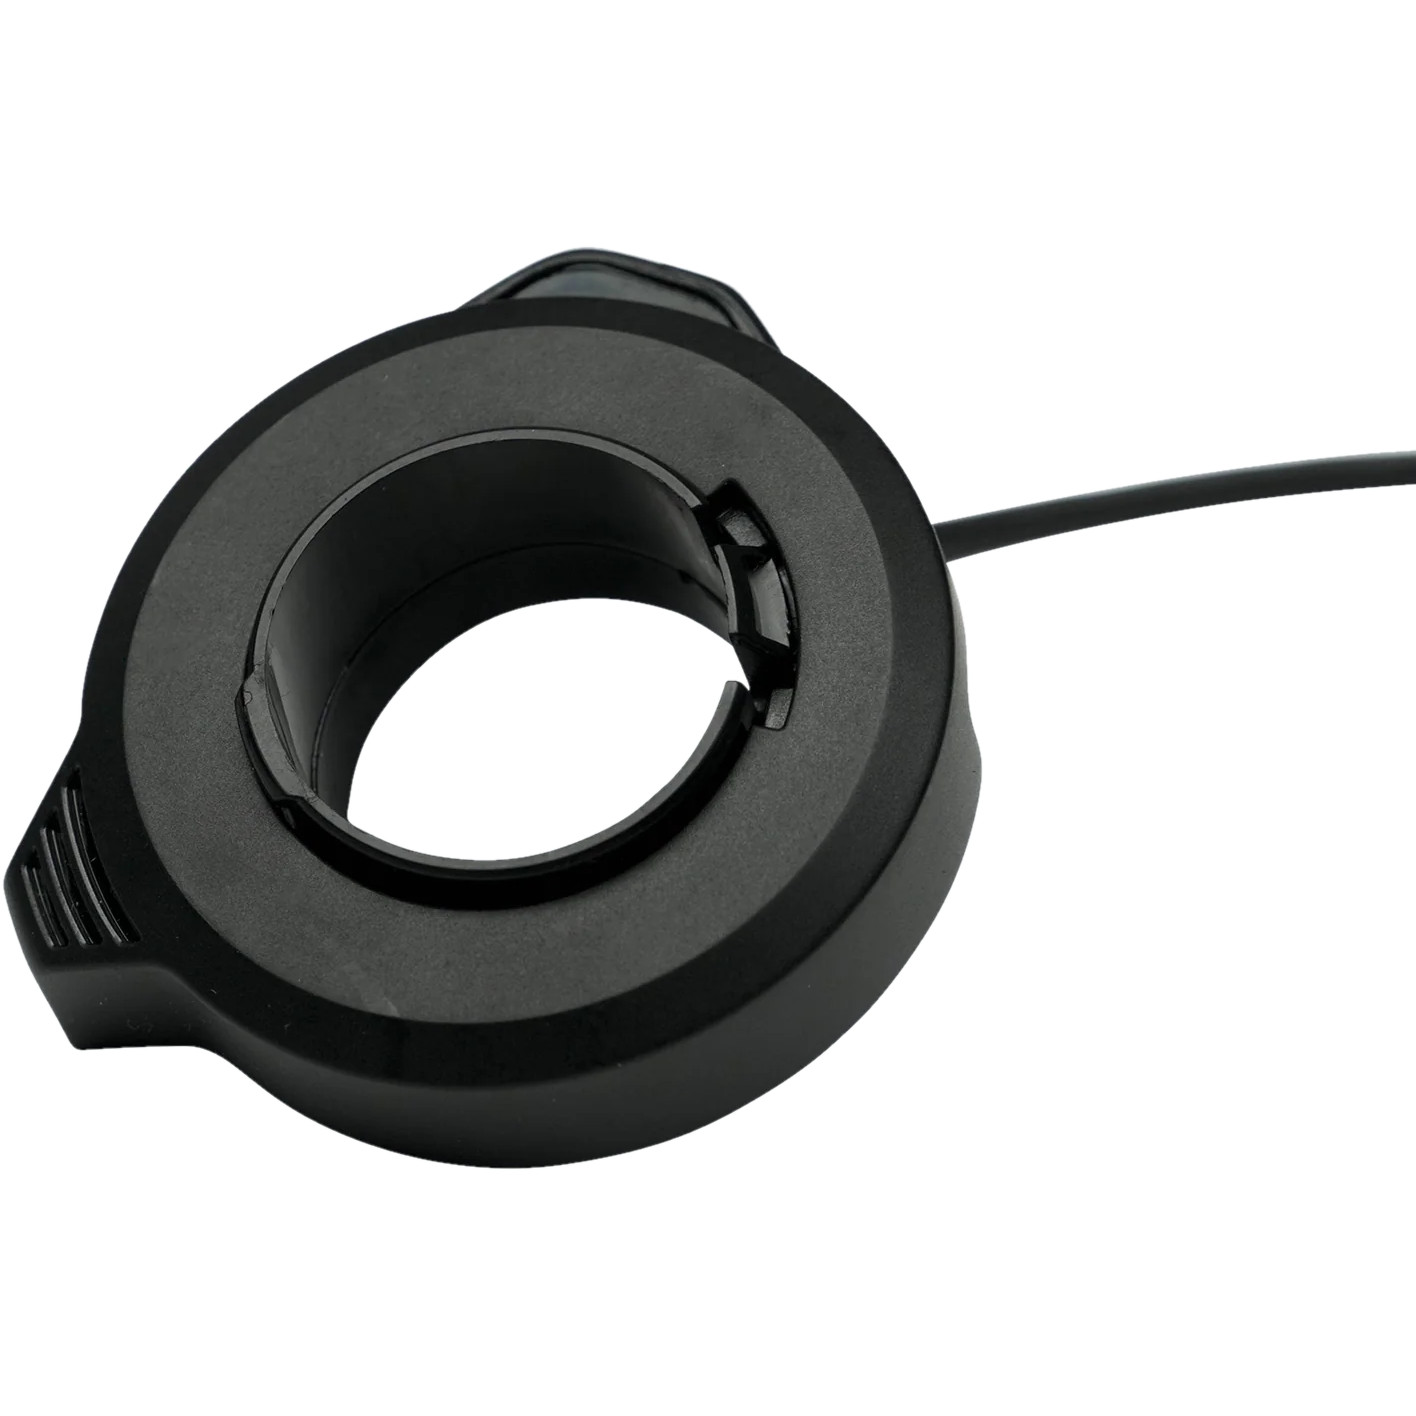 Productfoto van FAZUA Ergo Ring voor Ride 60 Ring Control / Control Hub